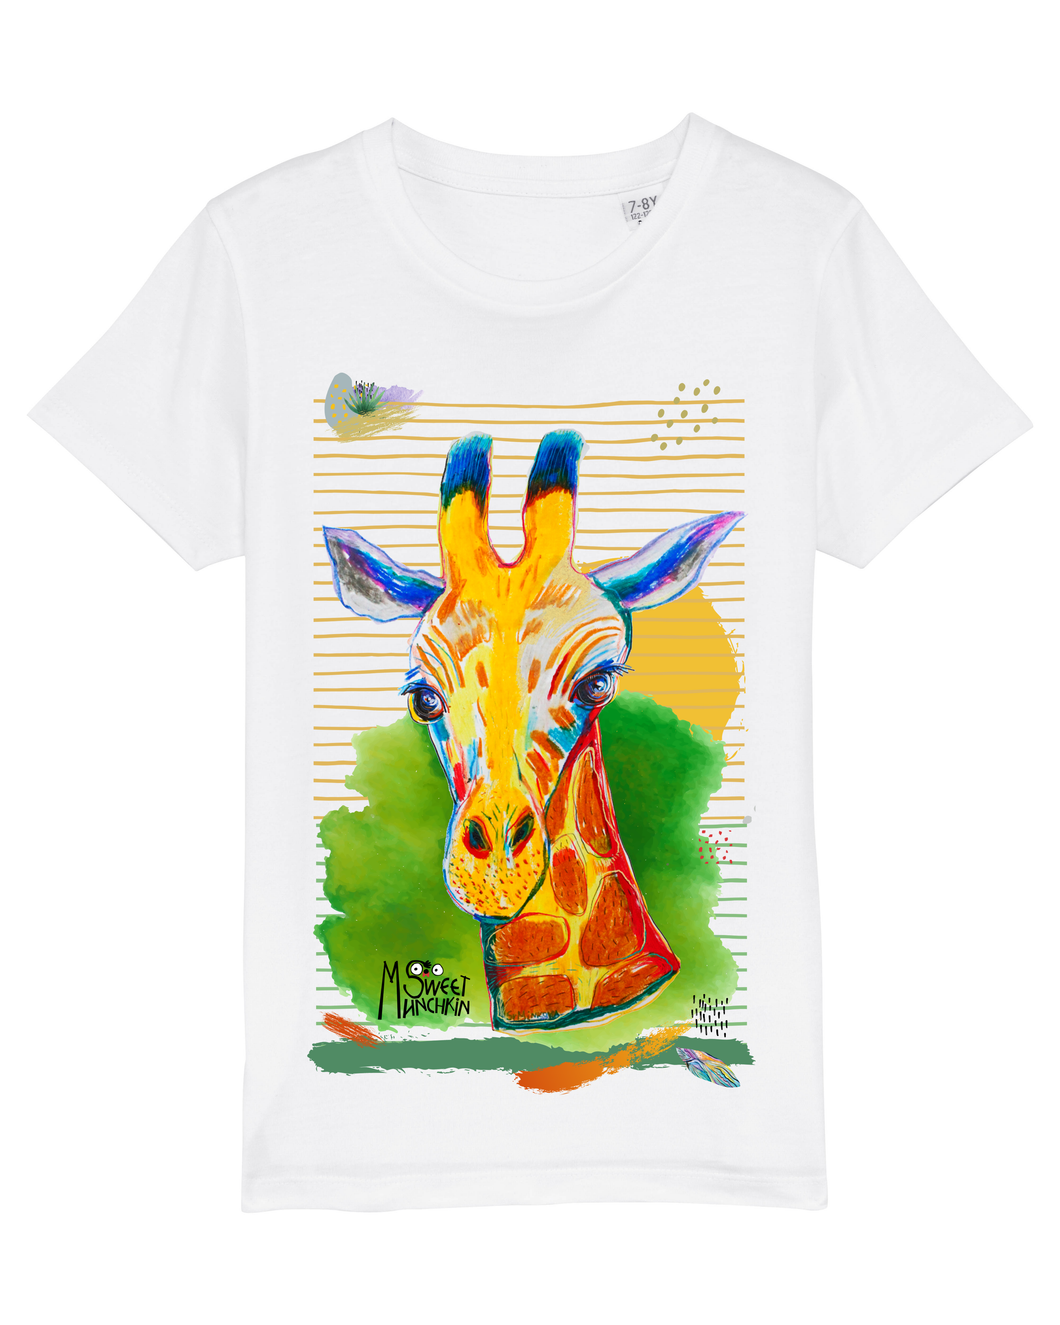 Giraffe kids tshirt